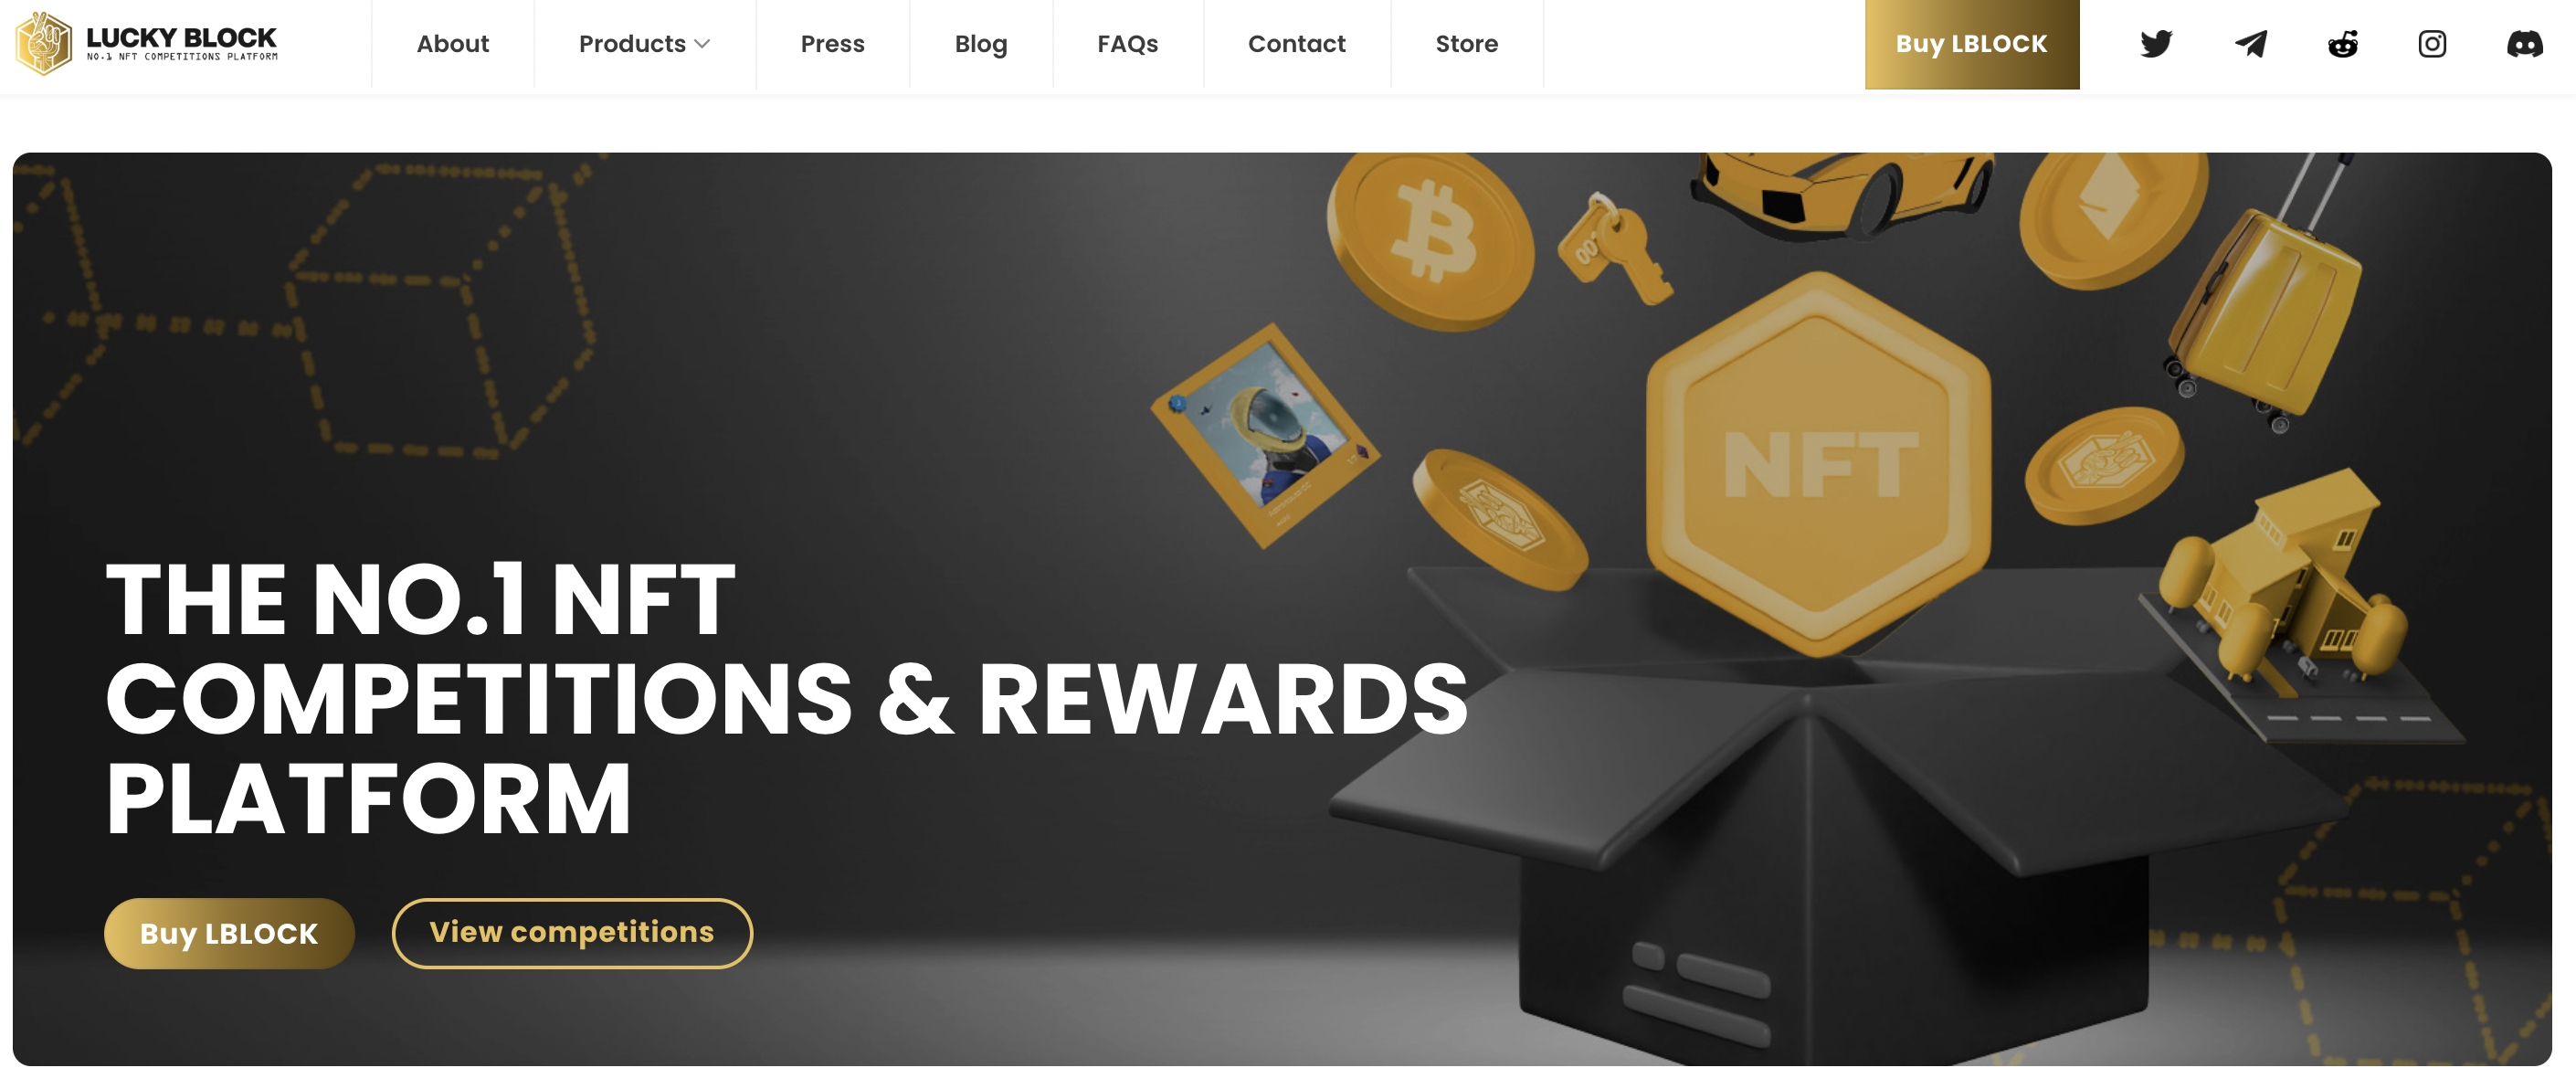 Lucky Block rewards platform